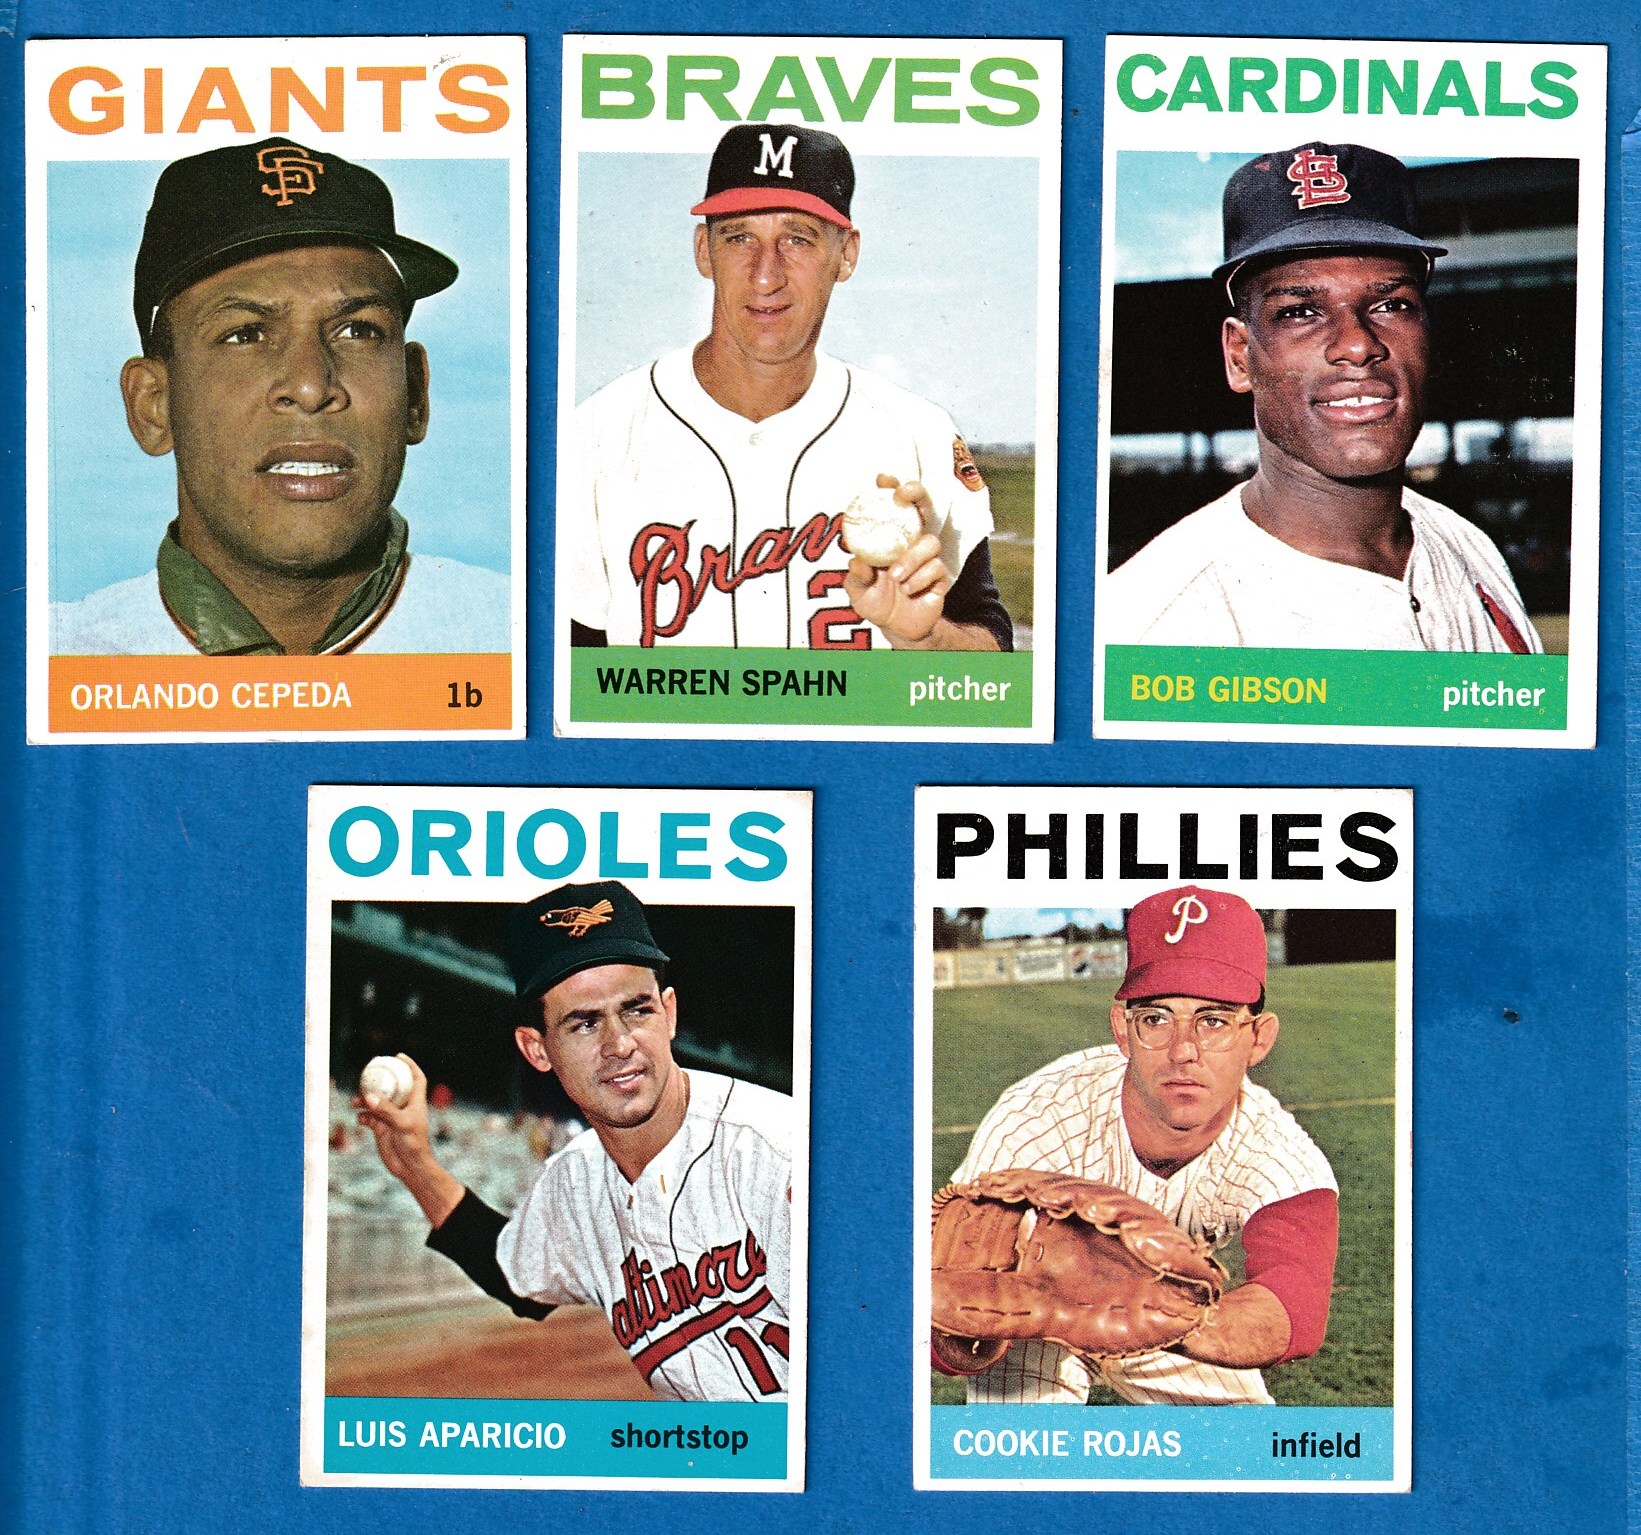 1964 Topps #540 Luis Aparicio SCARCE SHORT PRINT [#t] (Orioles) Baseball cards value